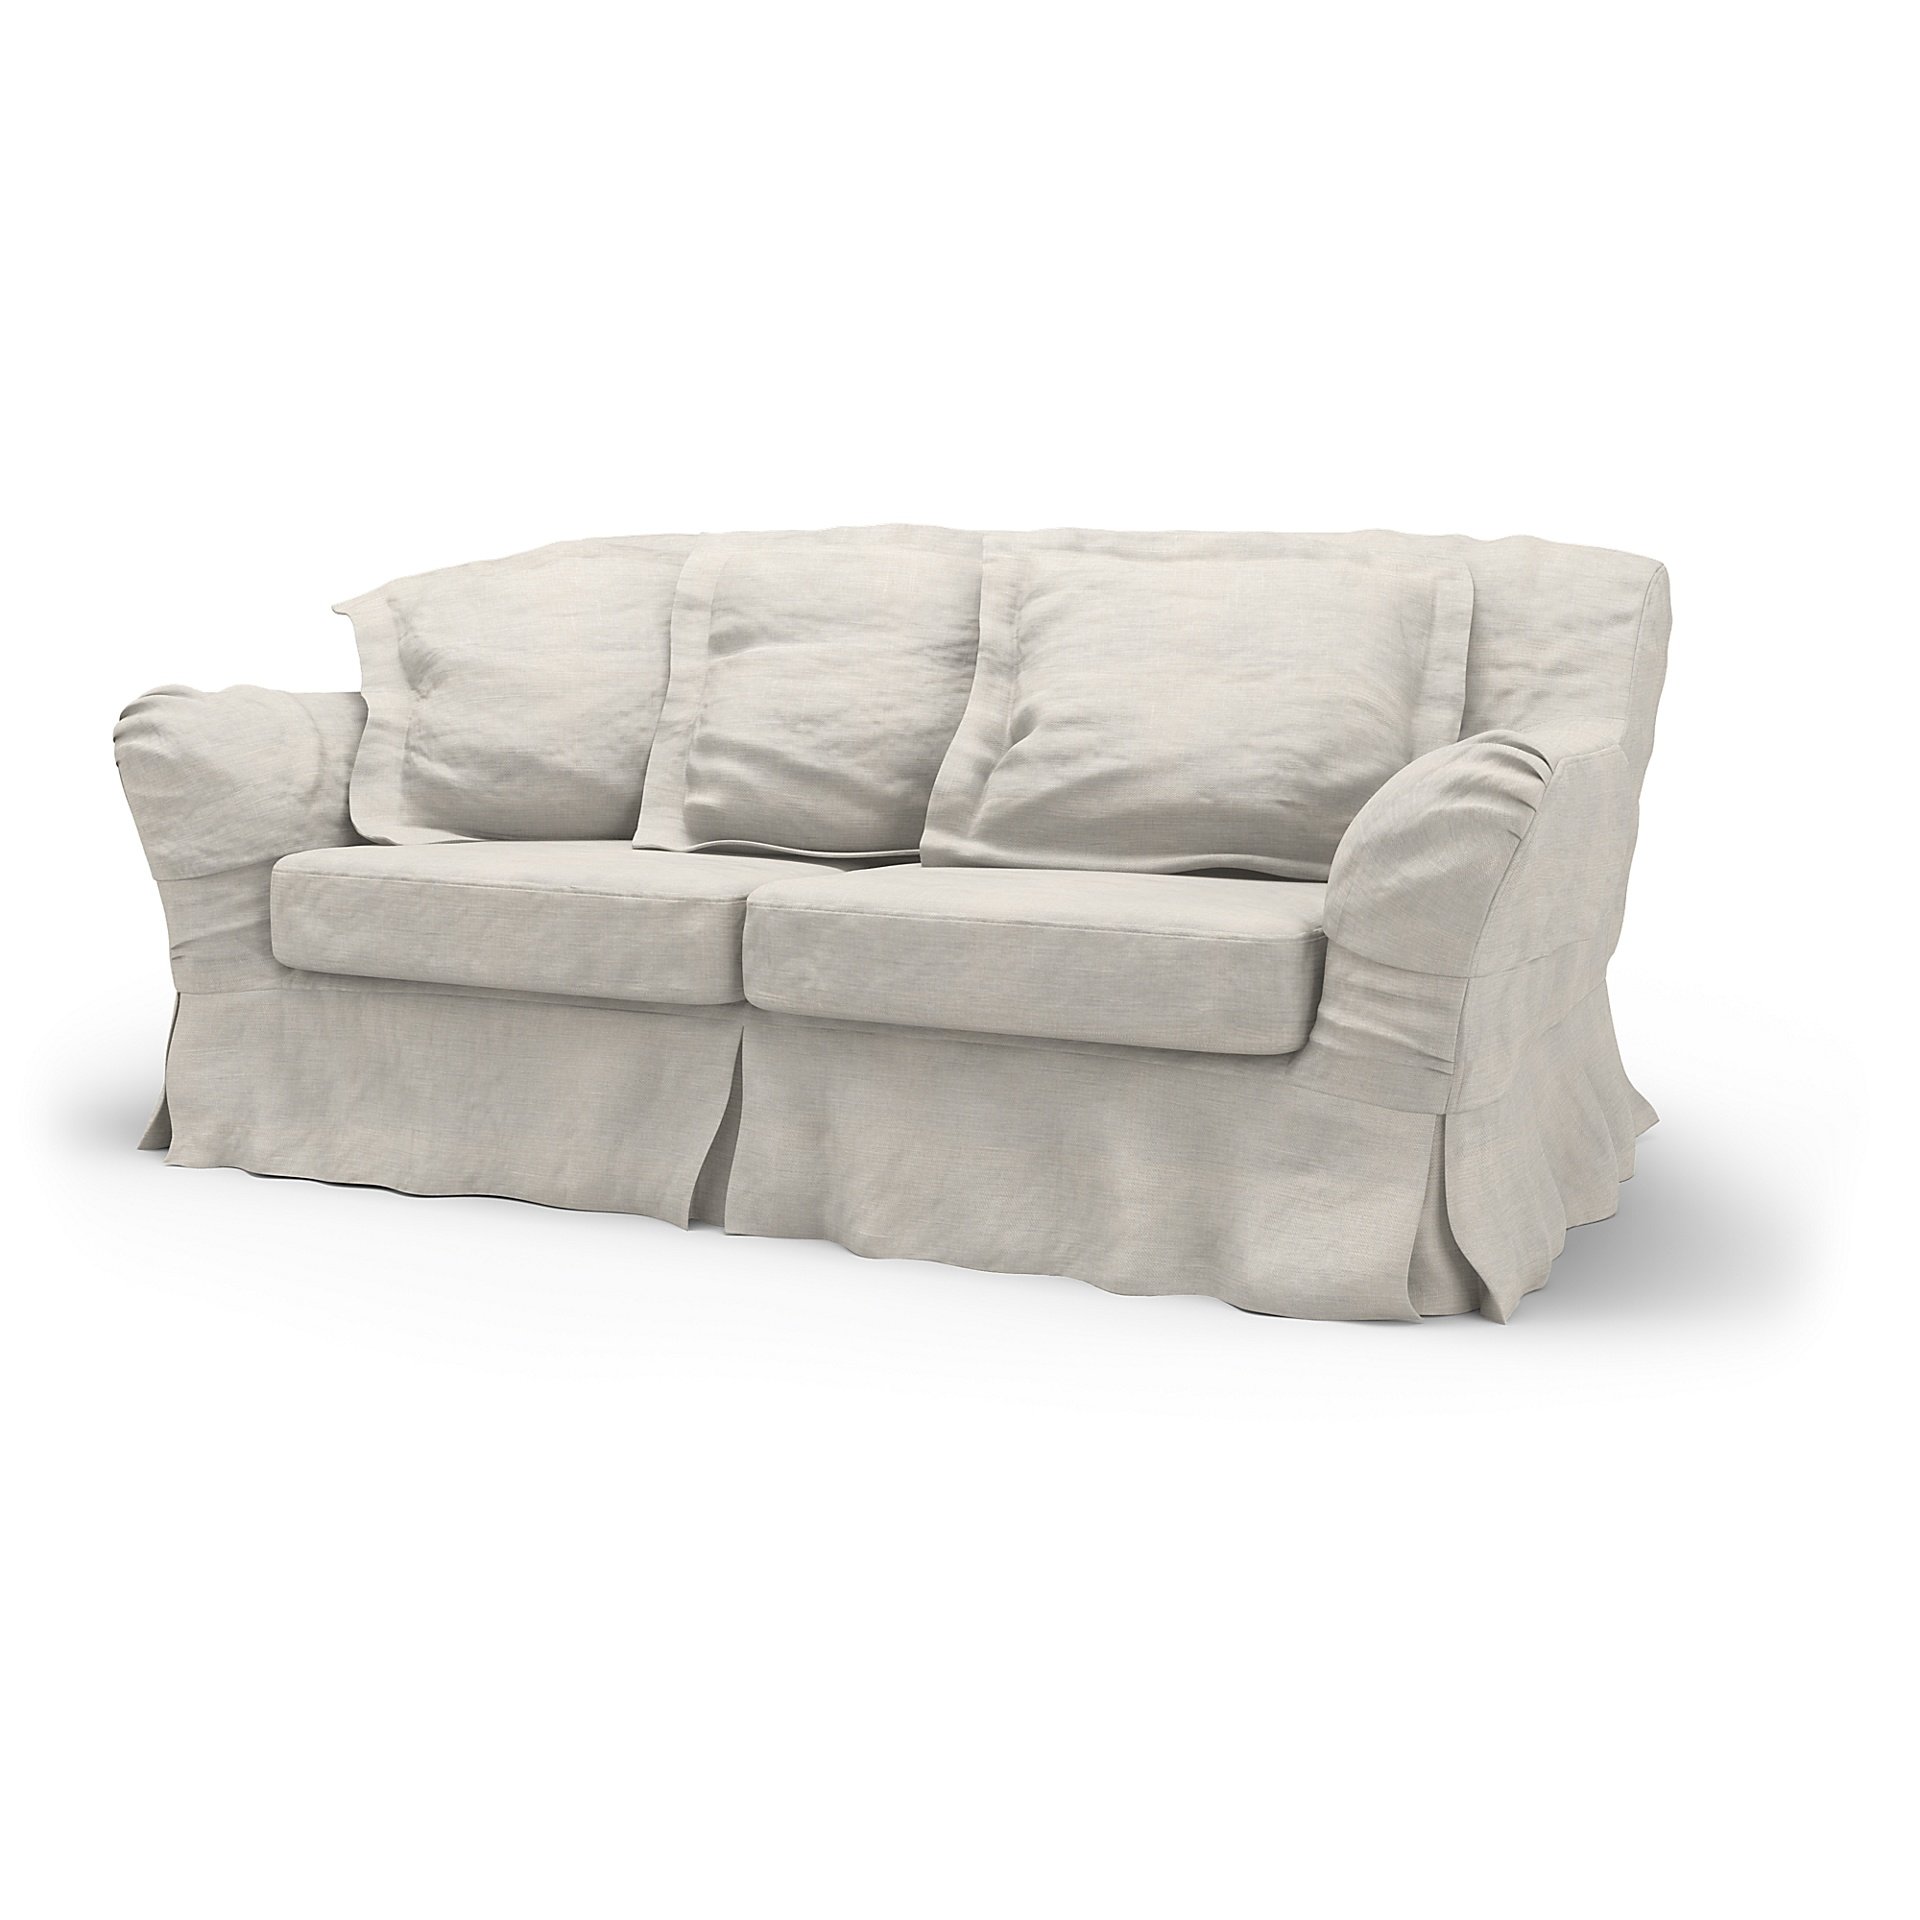 IKEA - Tomelilla 2 Seater Sofa Cover, Soft White, Linen - Bemz